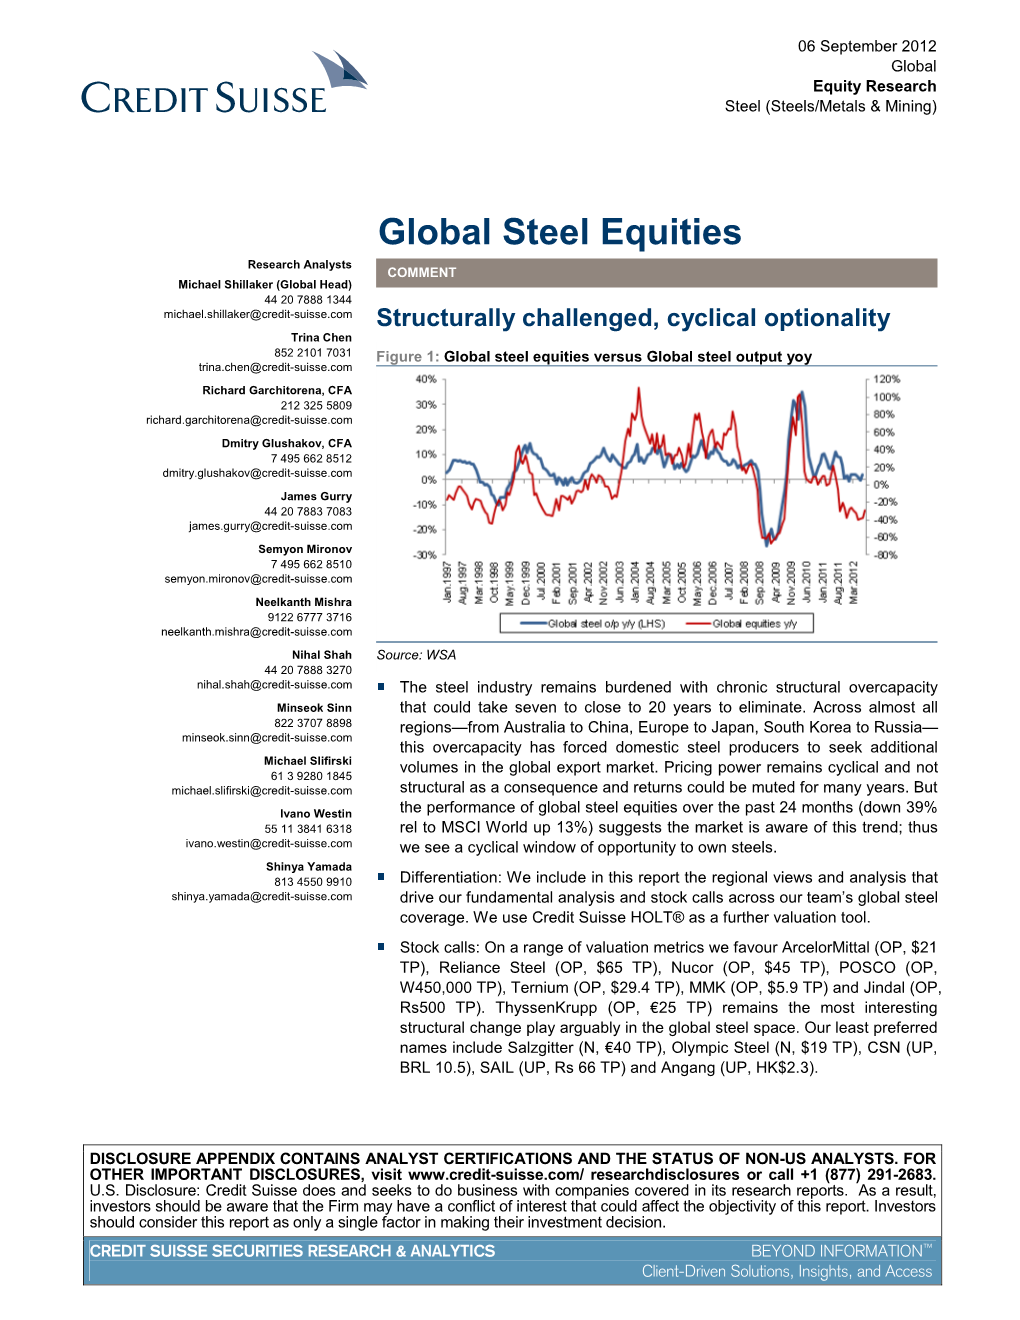 Global Steel Equities